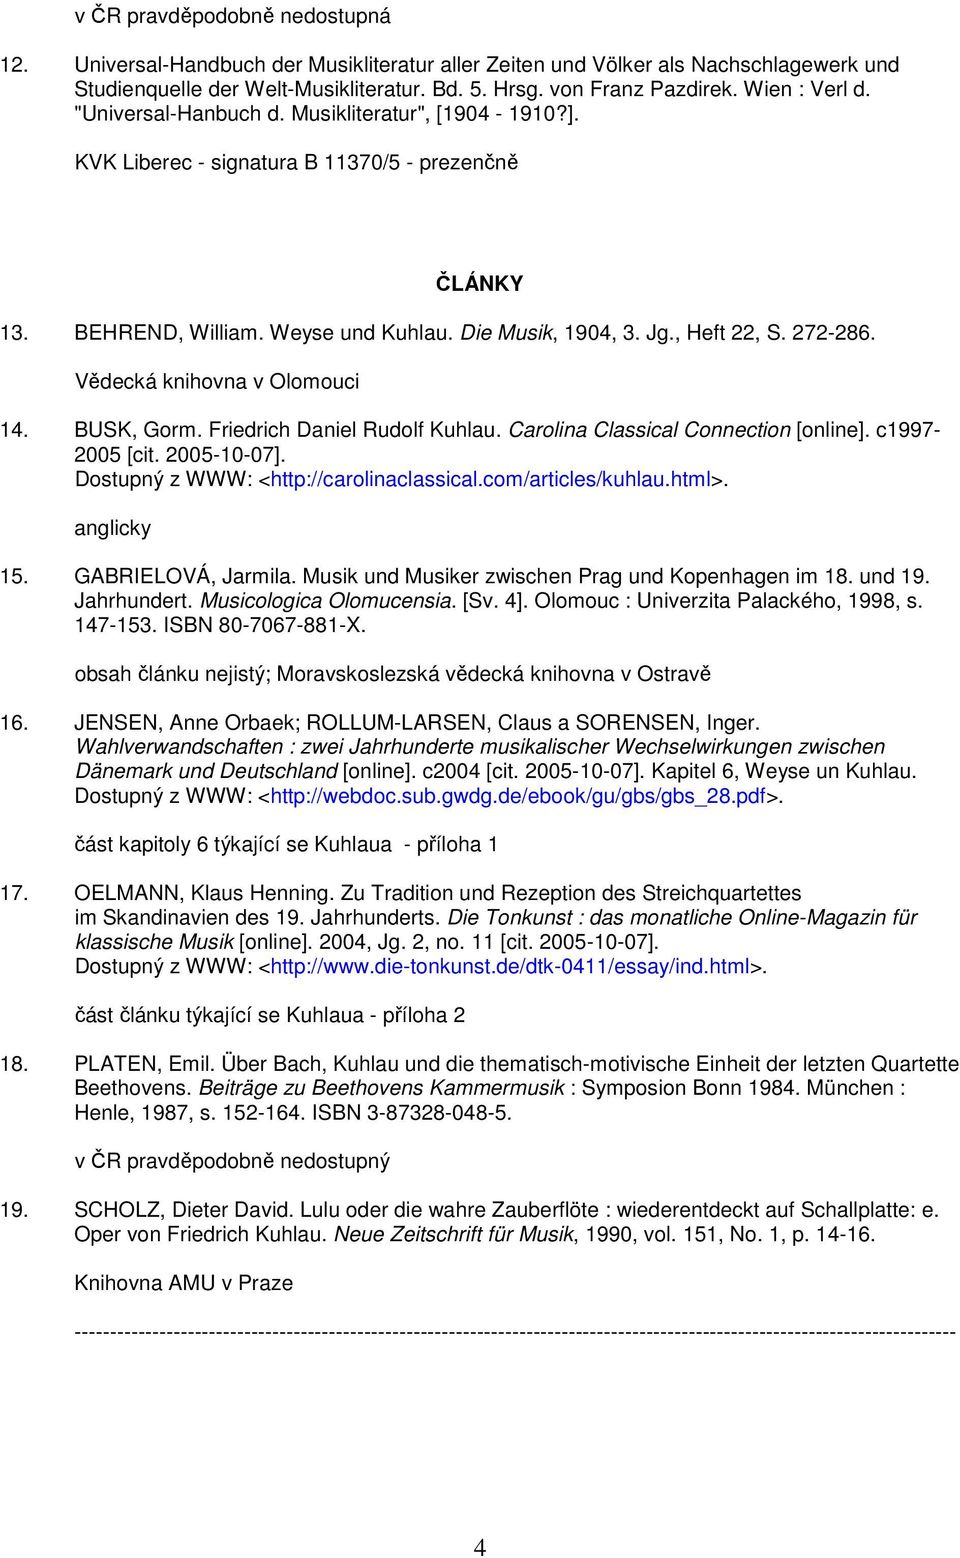 Vědecká knihovna v Olomouci 14. BUSK, Gorm. Friedrich Daniel Rudolf Kuhlau. Carolina Classical Connection [online]. c1997-2005 [cit. 2005-10-07]. Dostupný z WWW: <http://carolinaclassical.